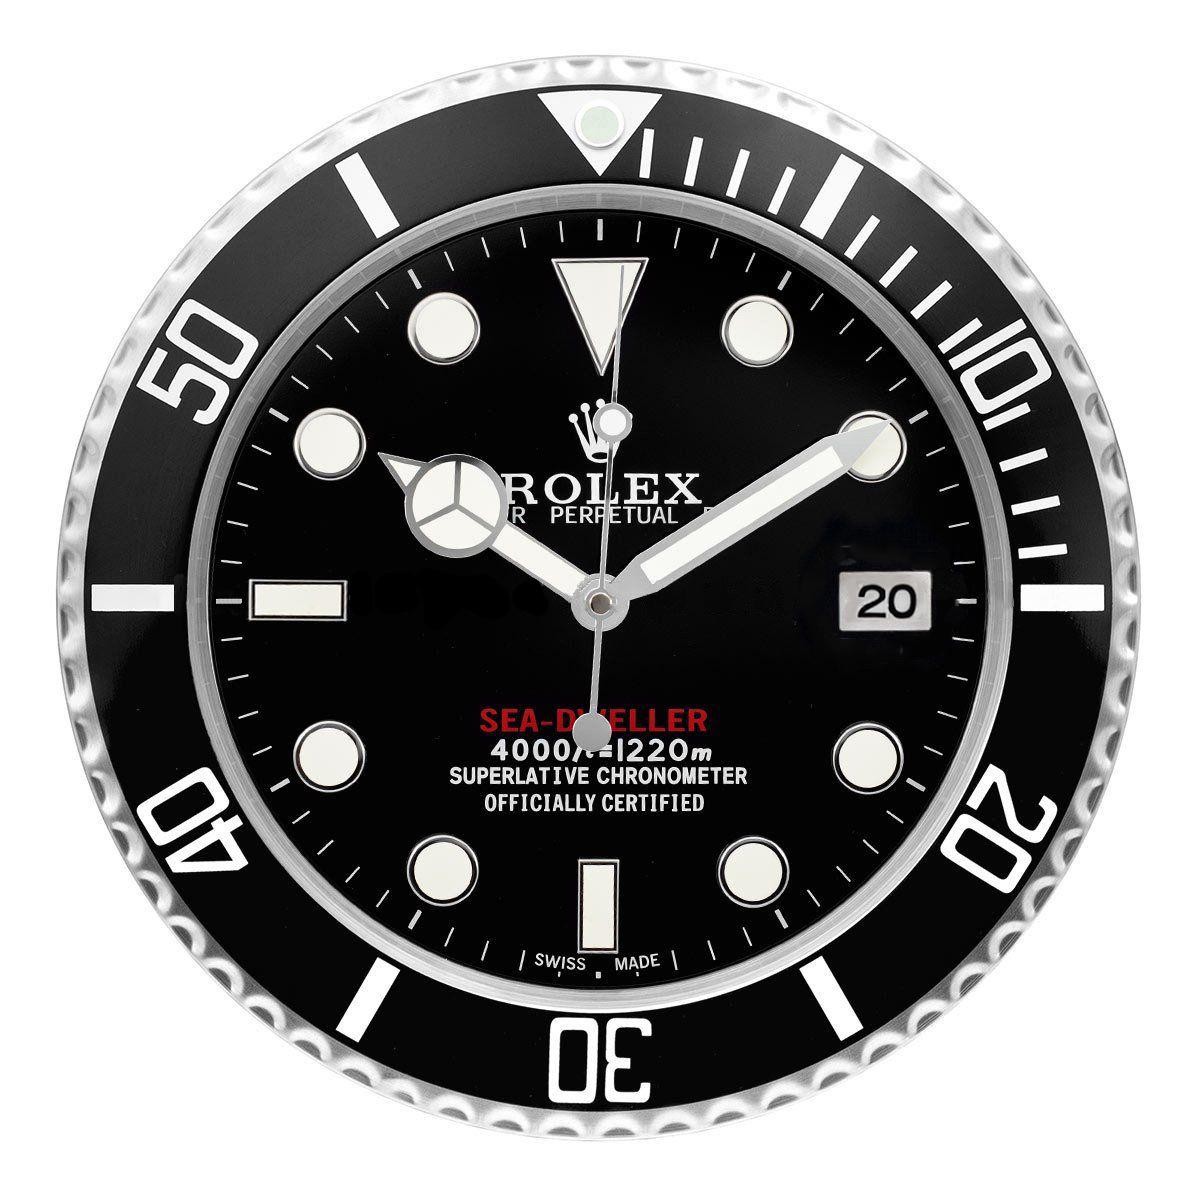 Rolex wall clock inspired sea dweller